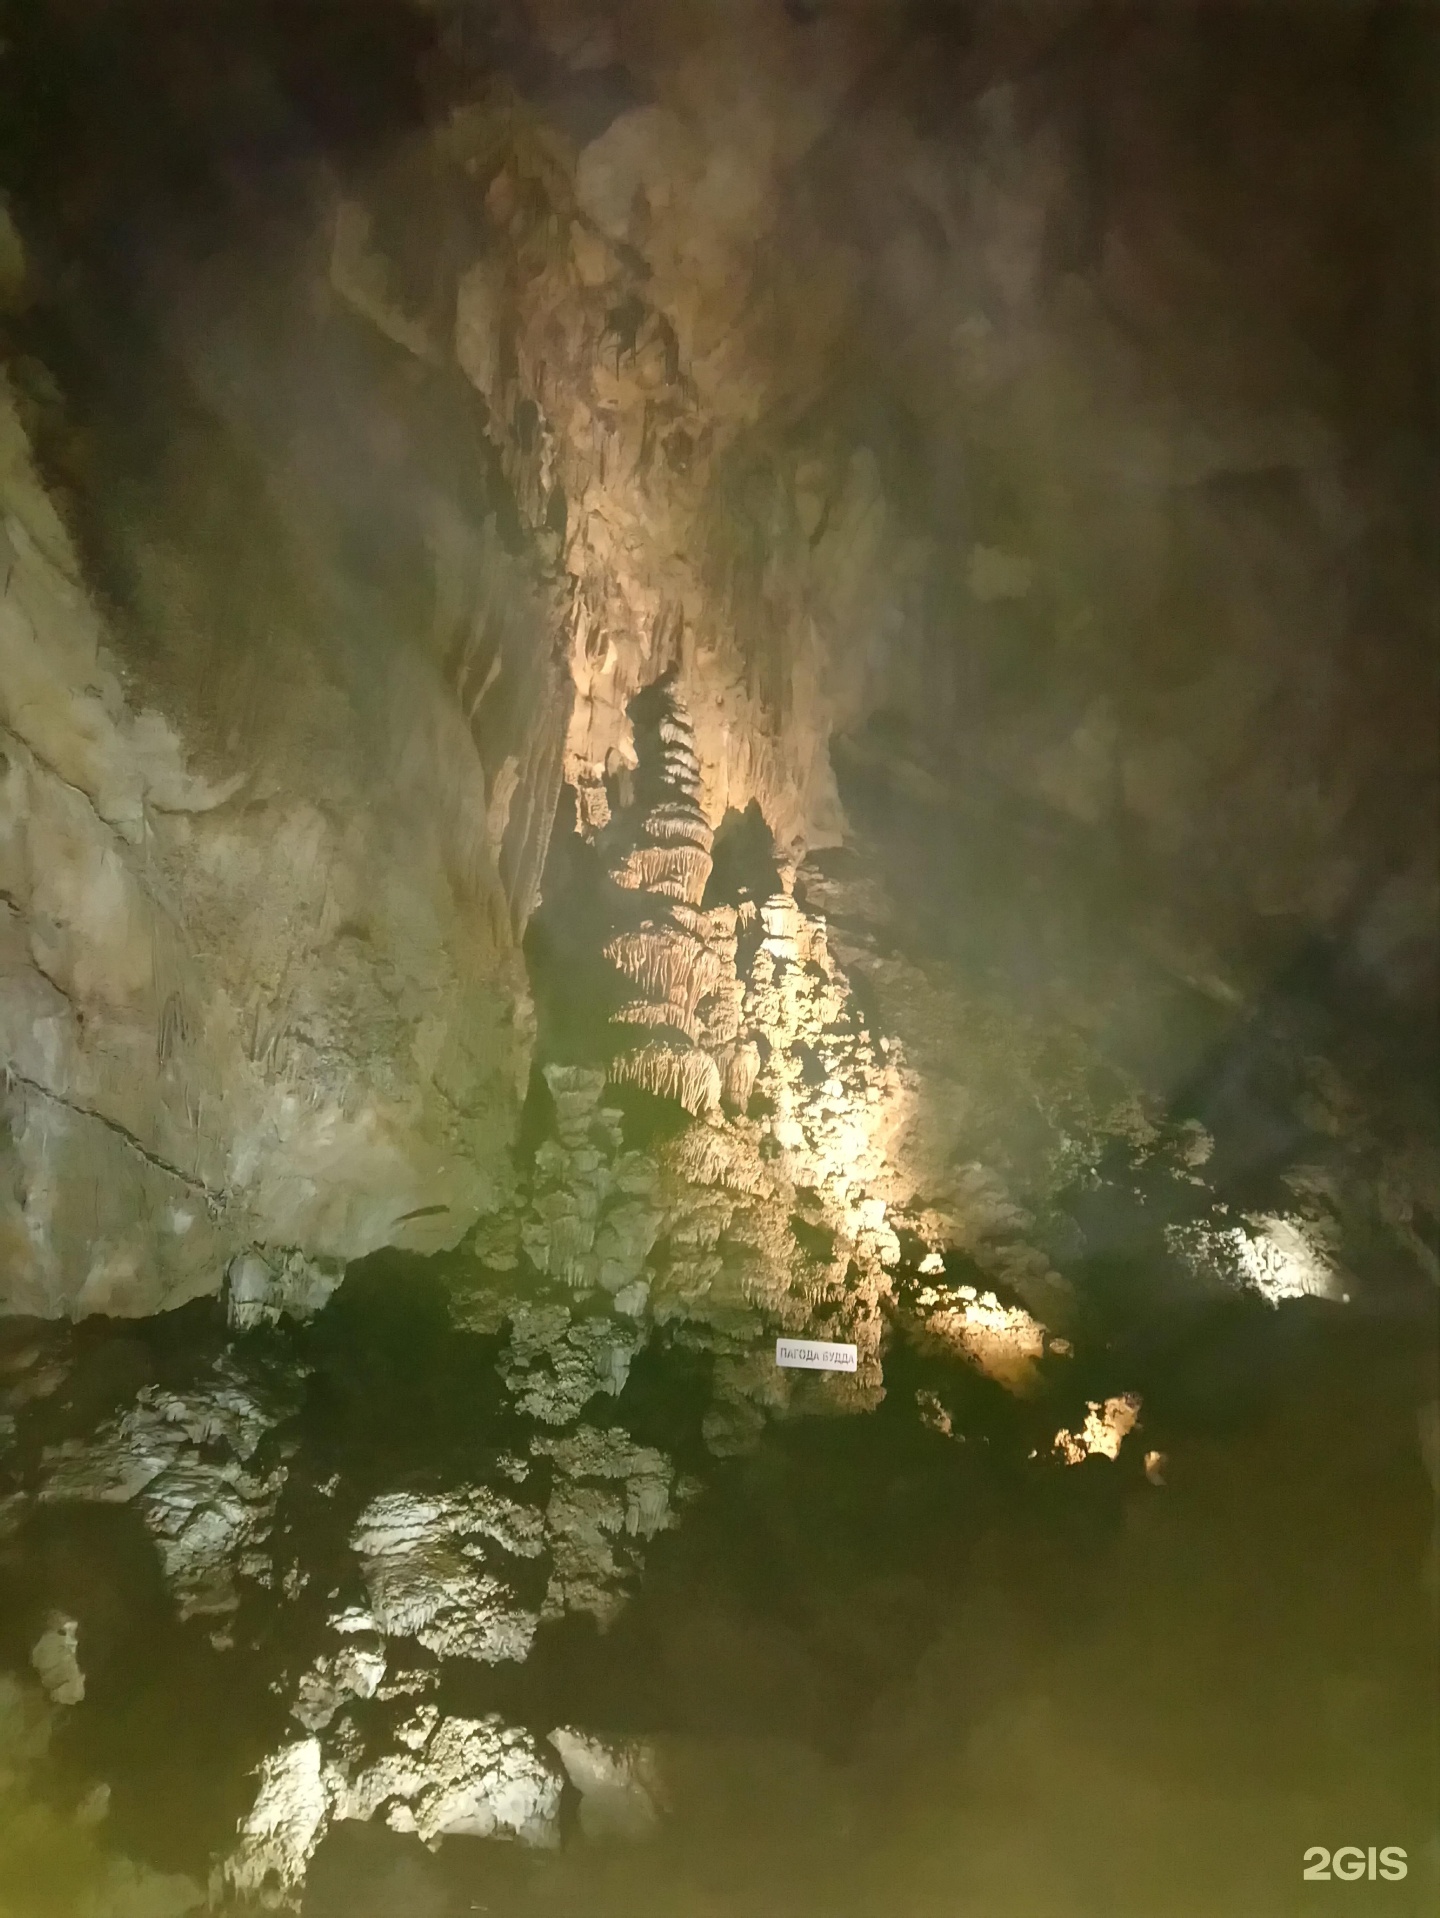 Пещера кашкулакская